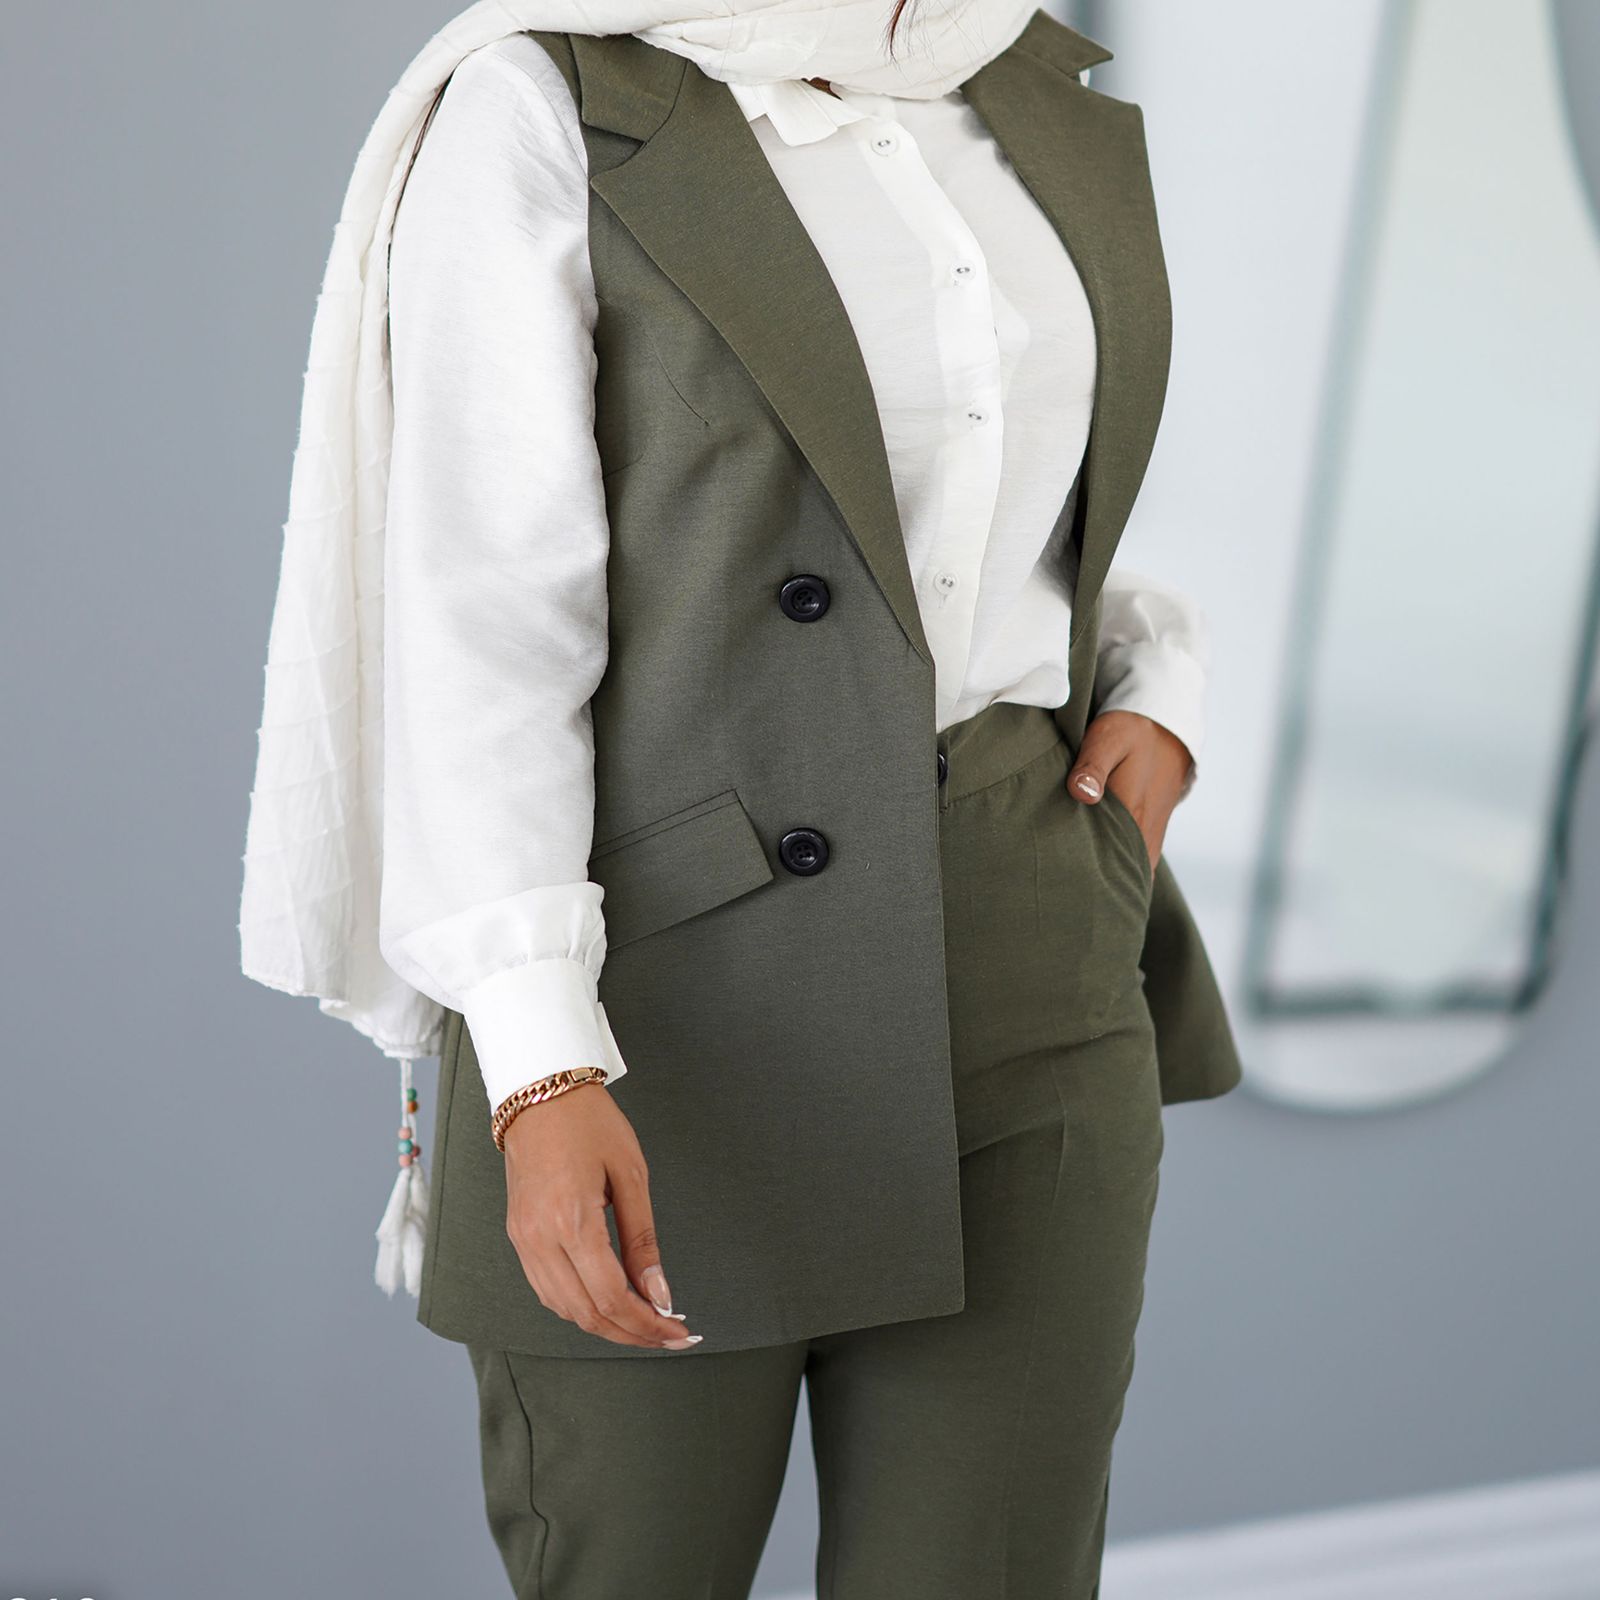 ست 3 تکه لباس زنانه السانا مدل  آترینا کد 160810 -  - 2